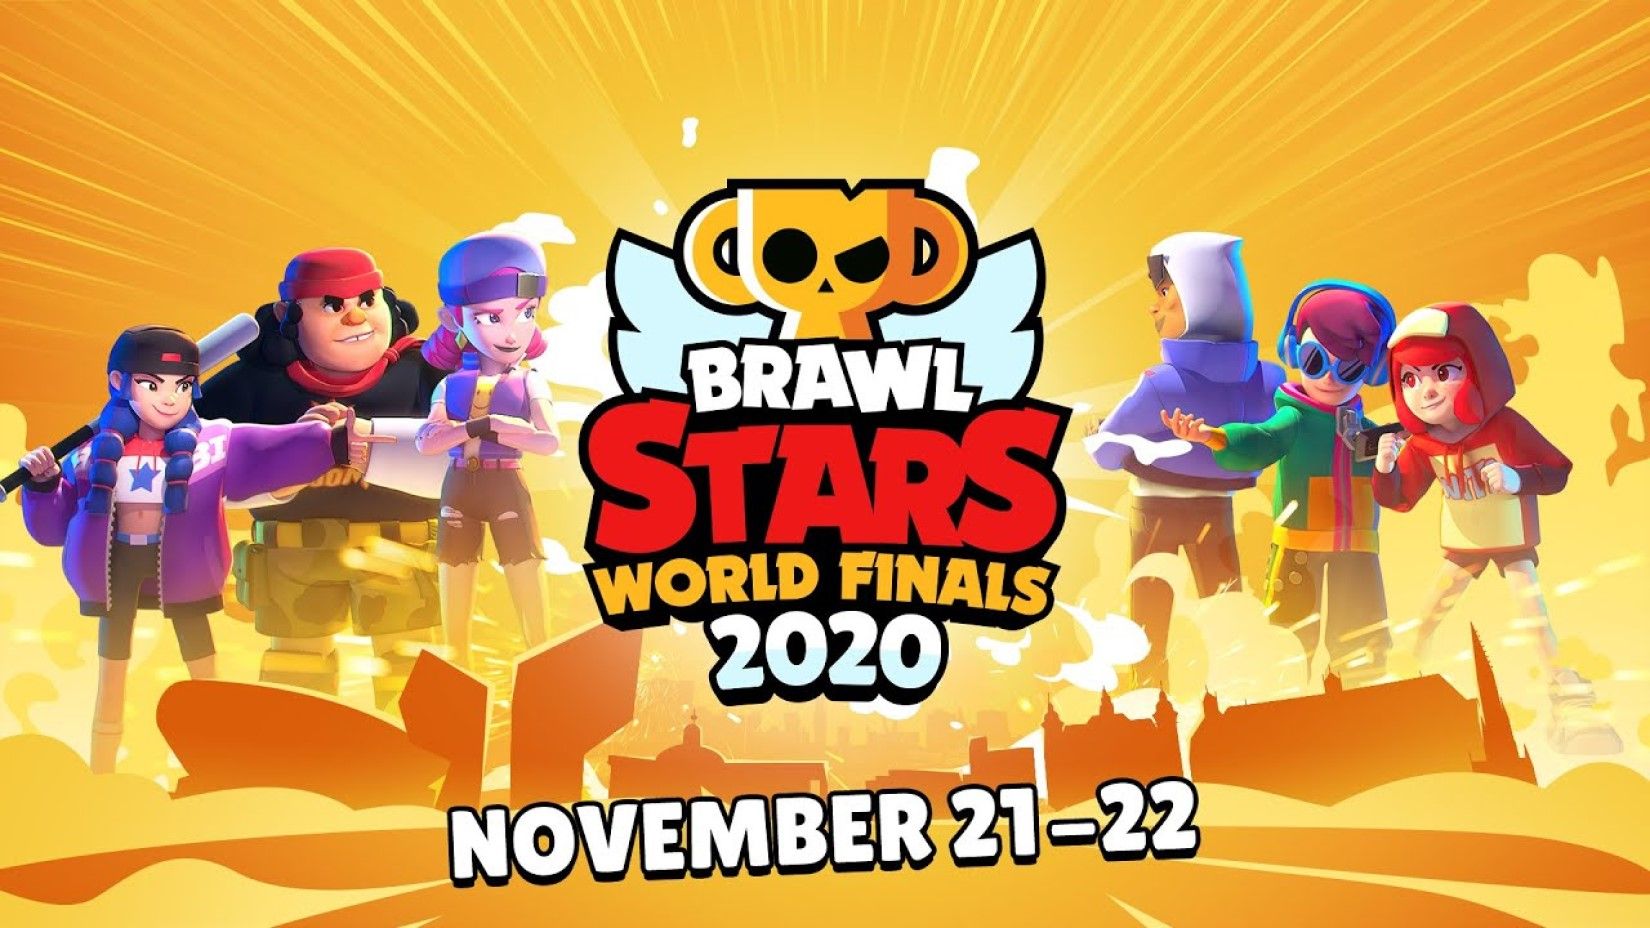 Stars world final